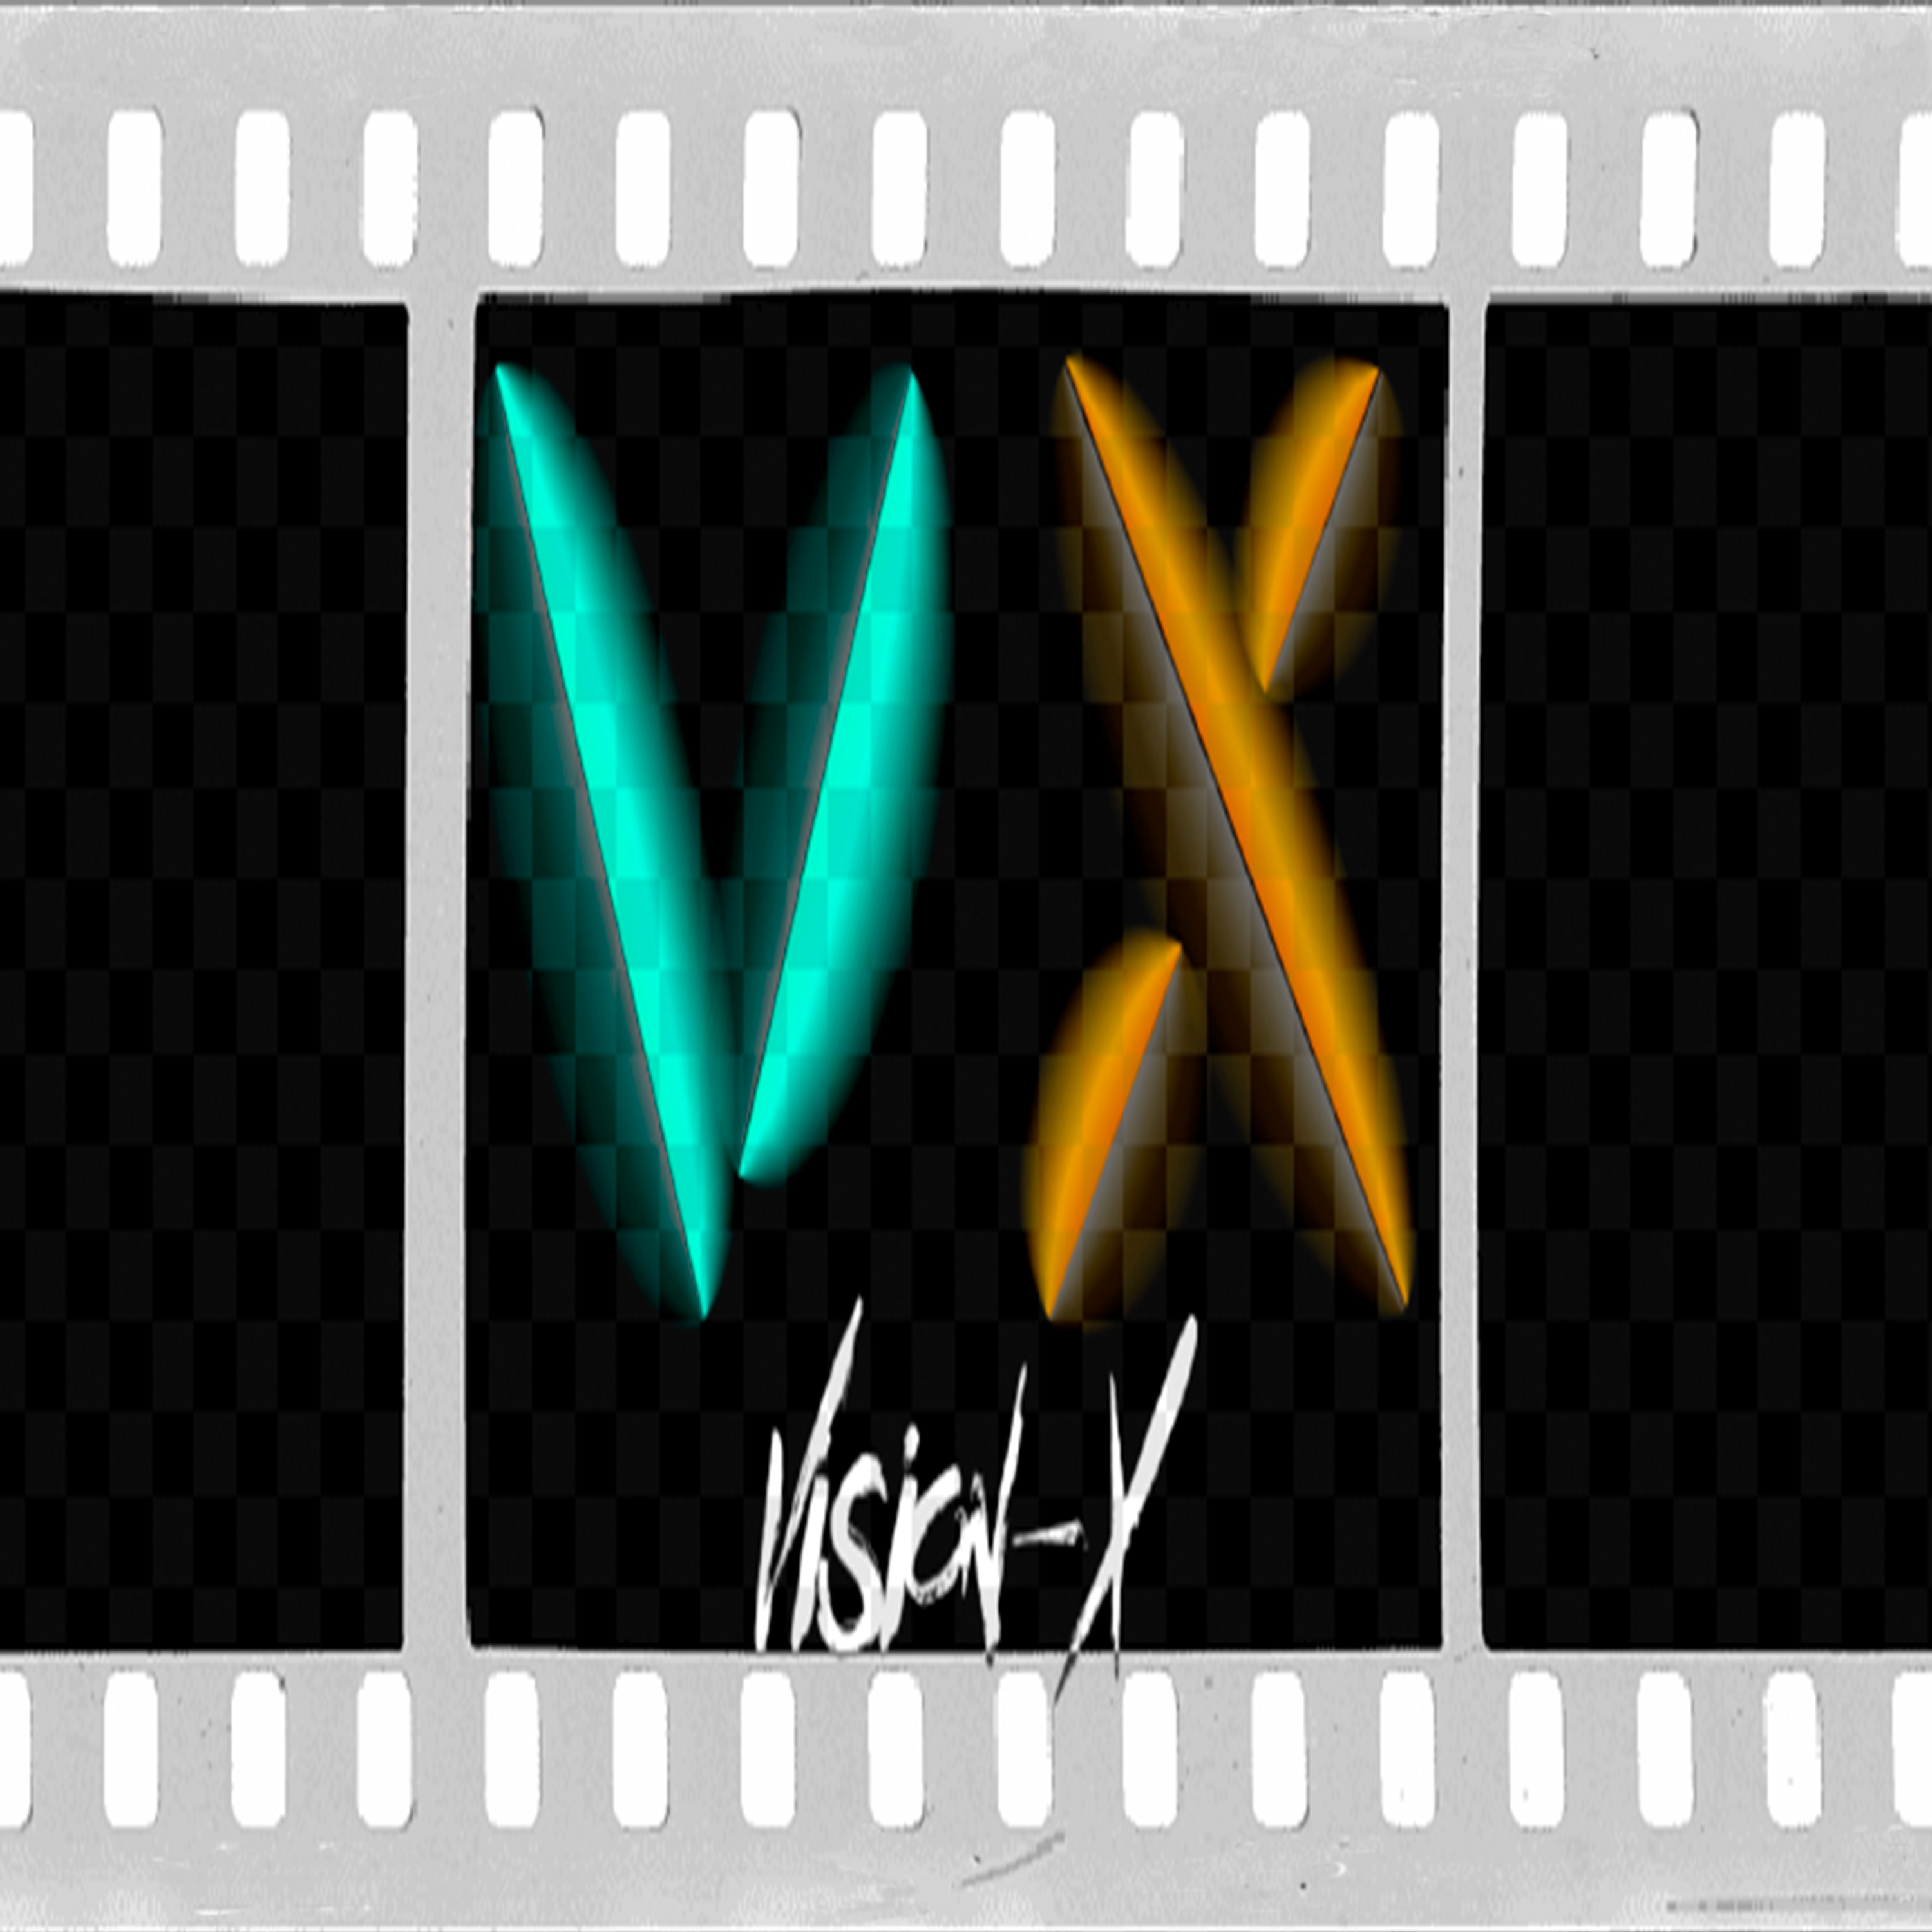 Vision-X